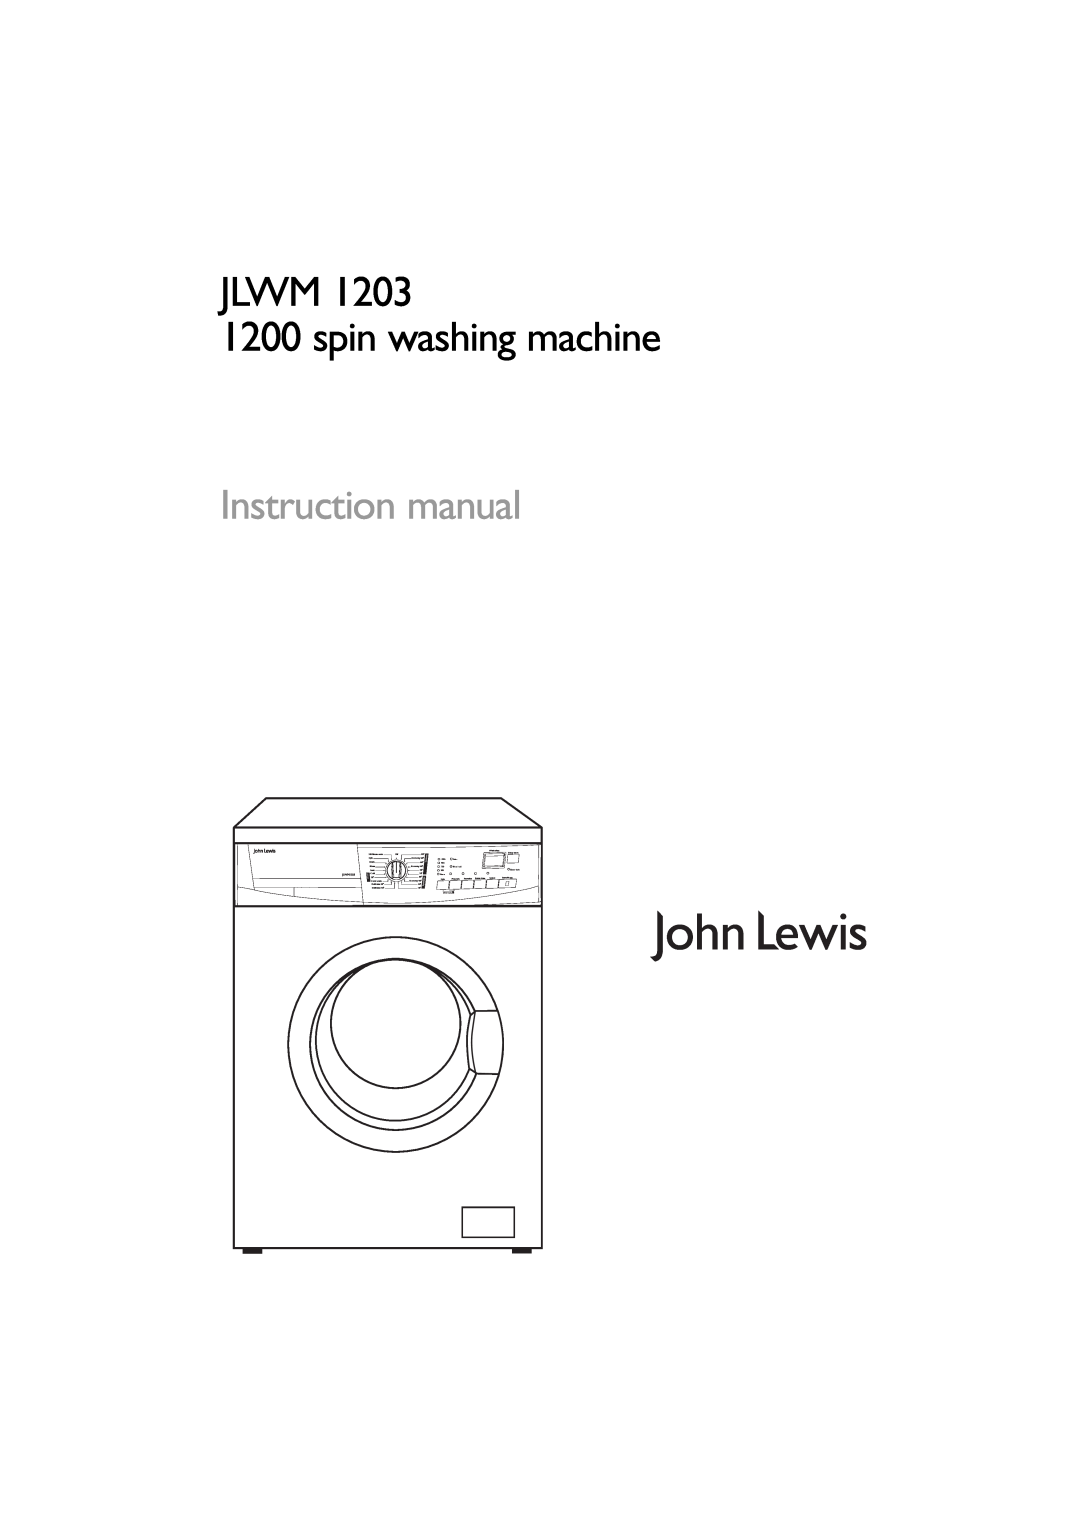 John Lewis JLWM 1203 instruction manual JLWM 1200 spin washing machine, Instruction manual, JLWM1203 